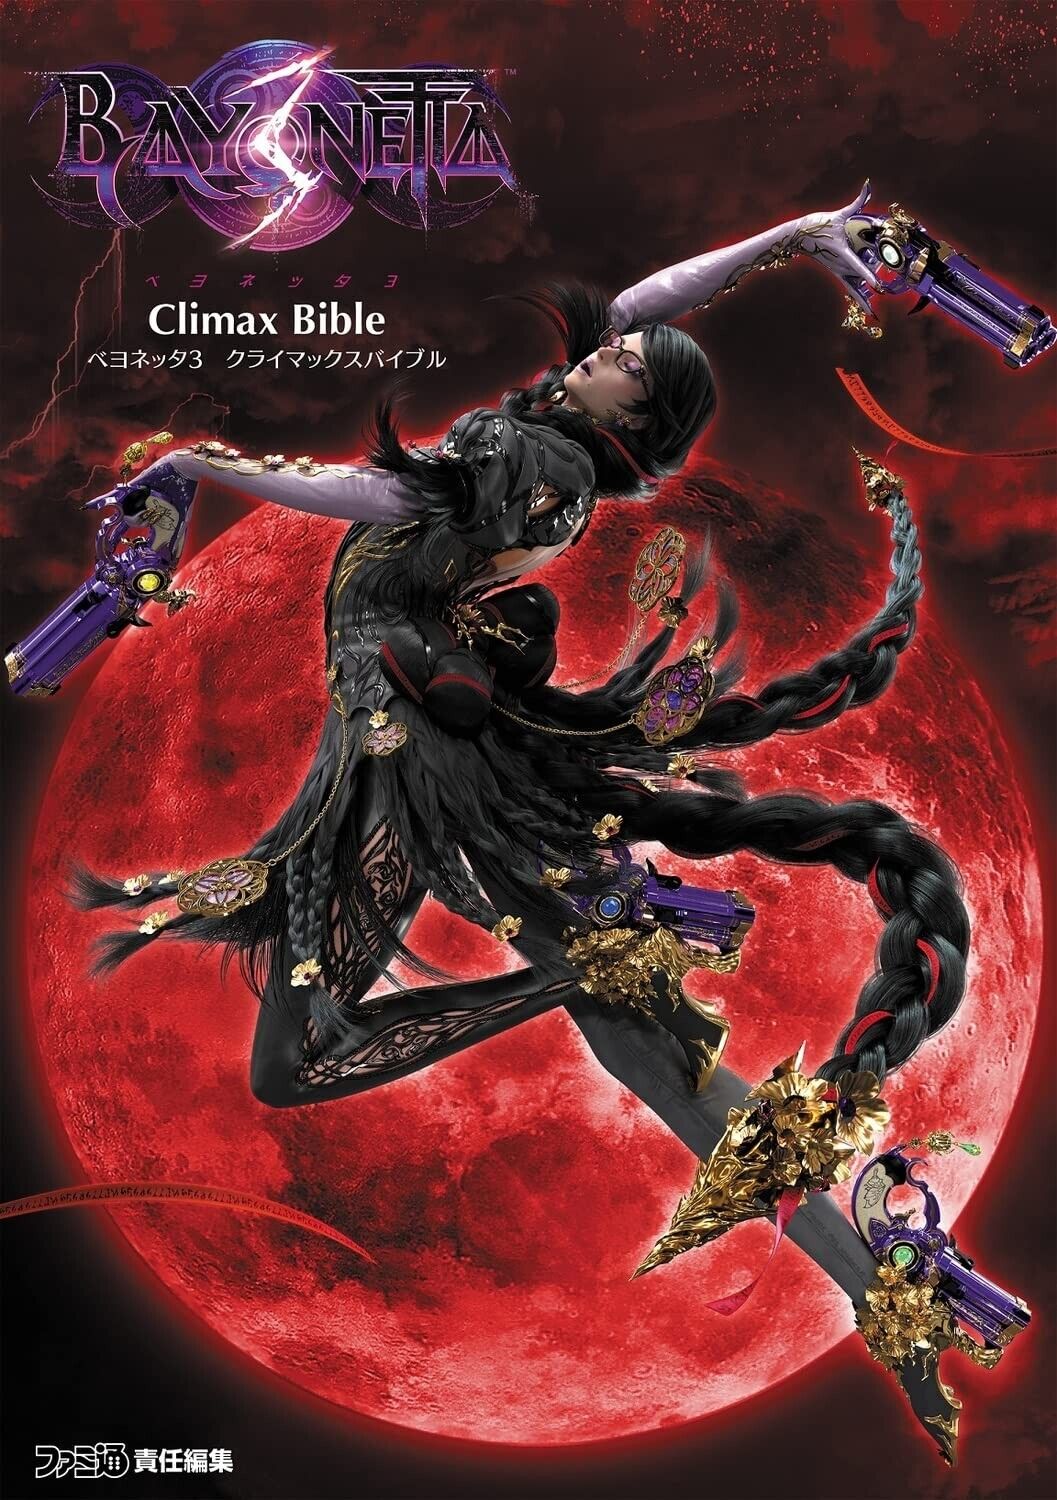 BAYONETTA 3 Climax Bible | JAPAN Game Guide Book